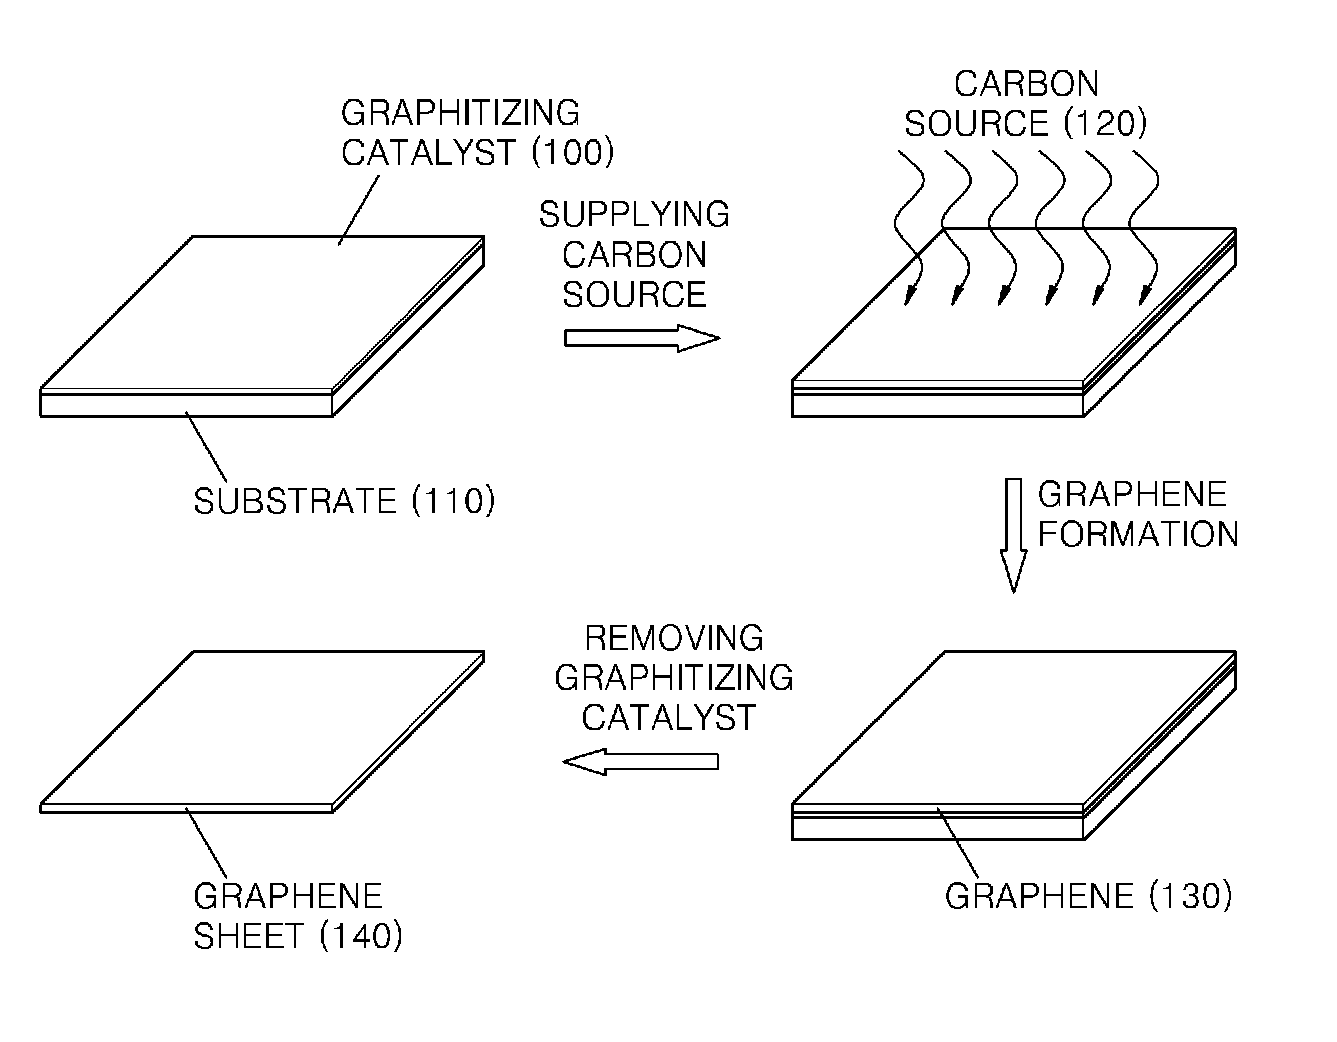 Graphene sheet and method of preparing the same